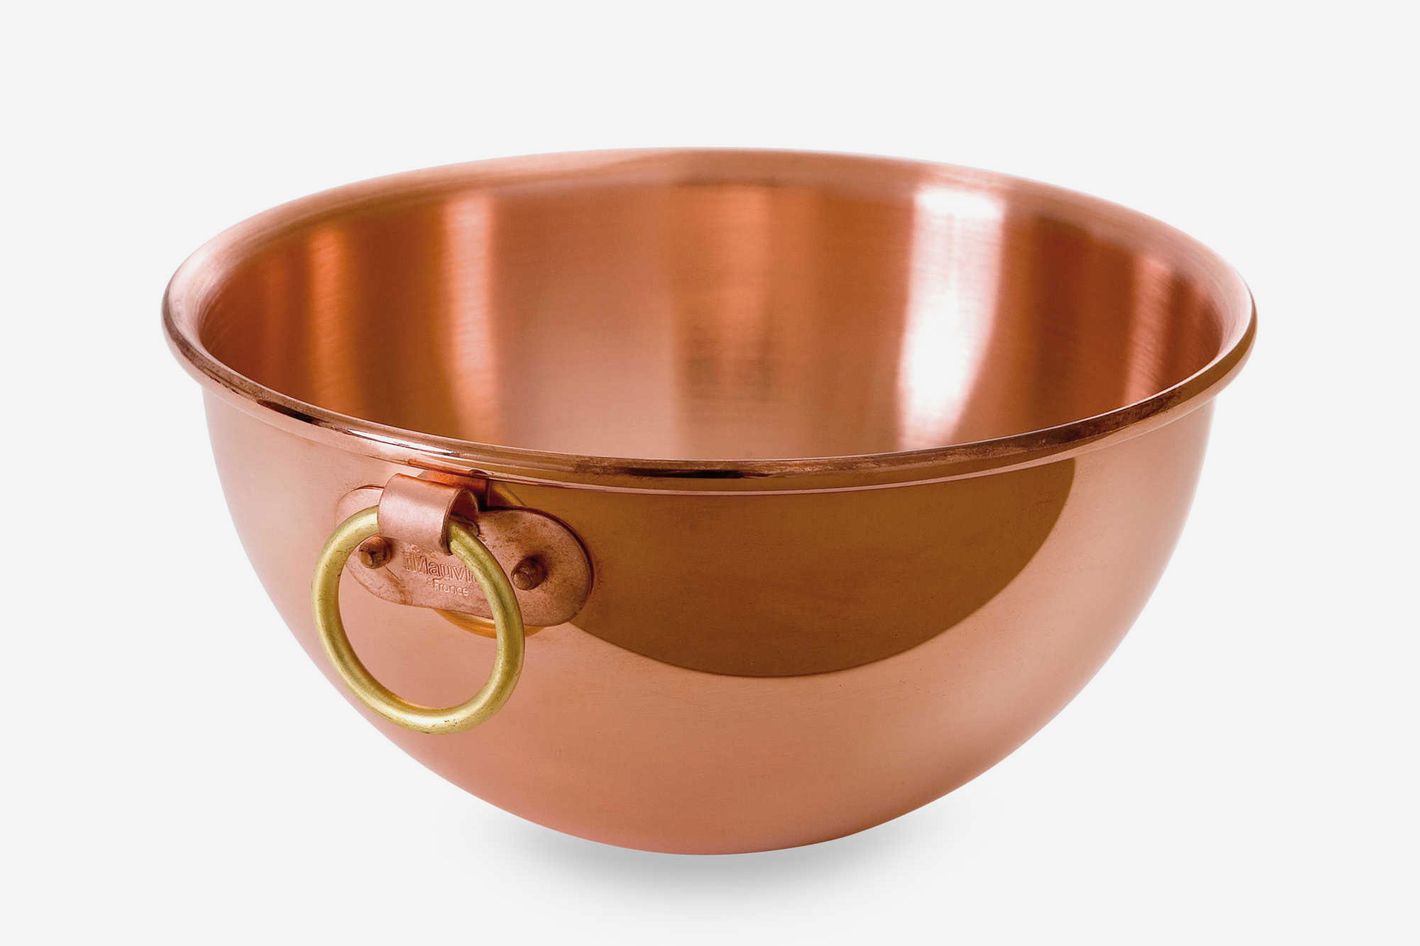 KitchenAid Artisan Copper Bowl - French Copper Studio